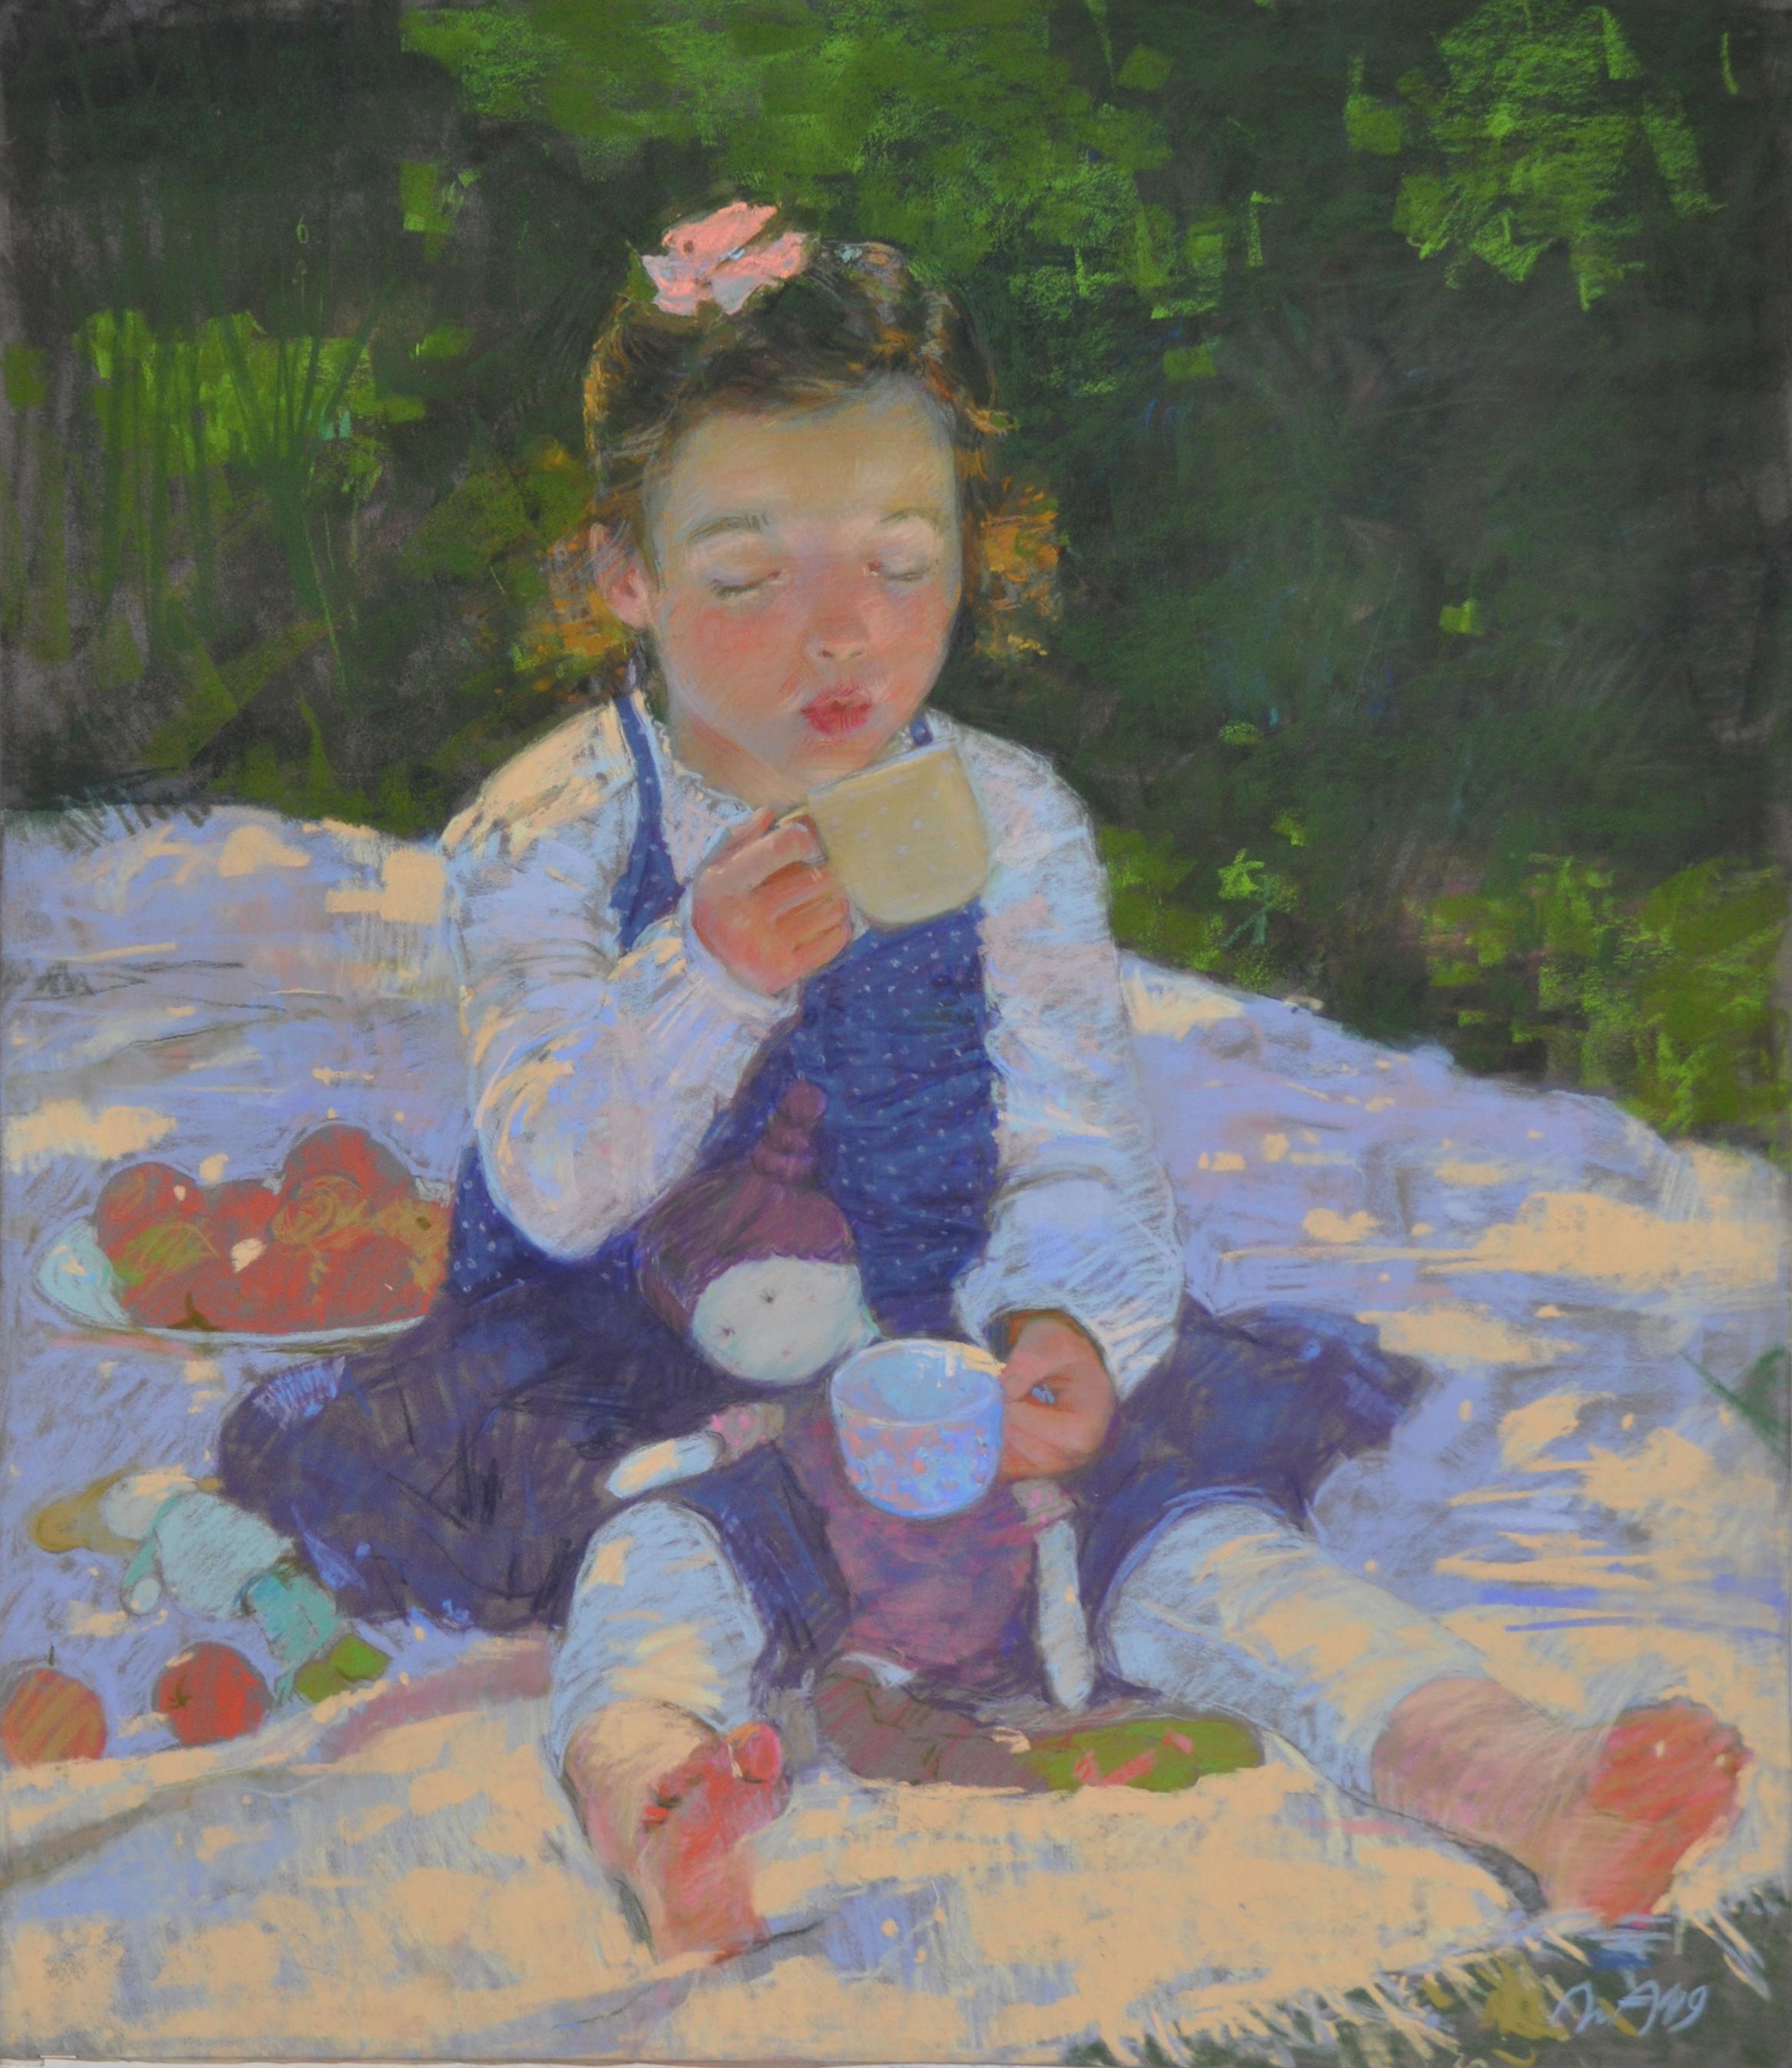 A doll's breakfast on the grass. Original modern art painting